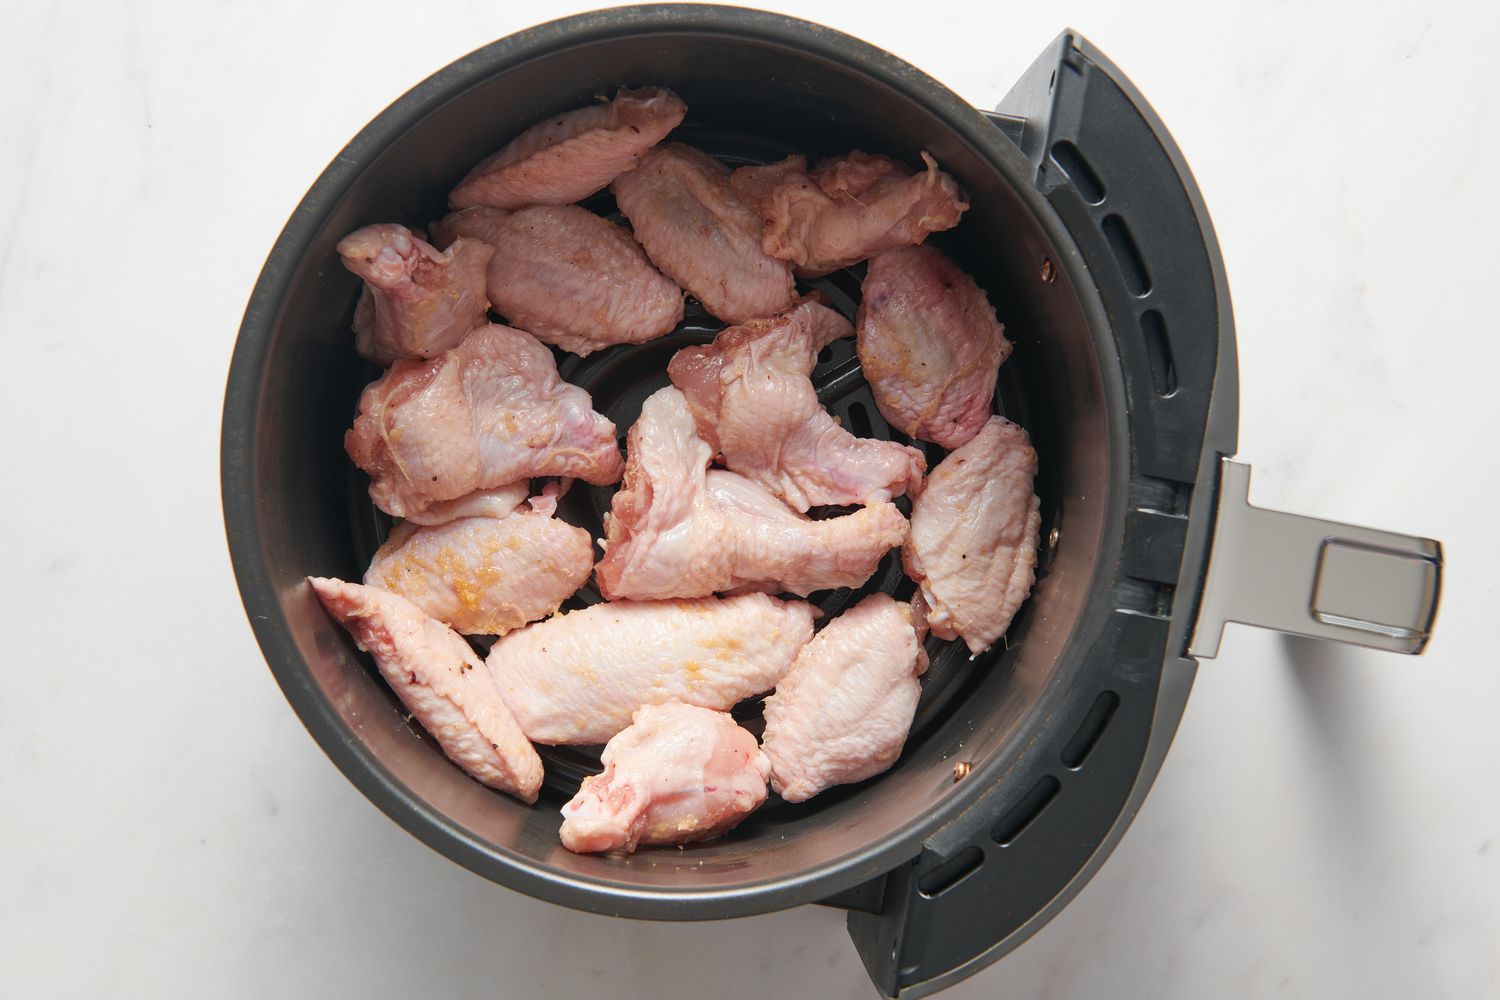 Seasoned chicken wings in an air fryer basket